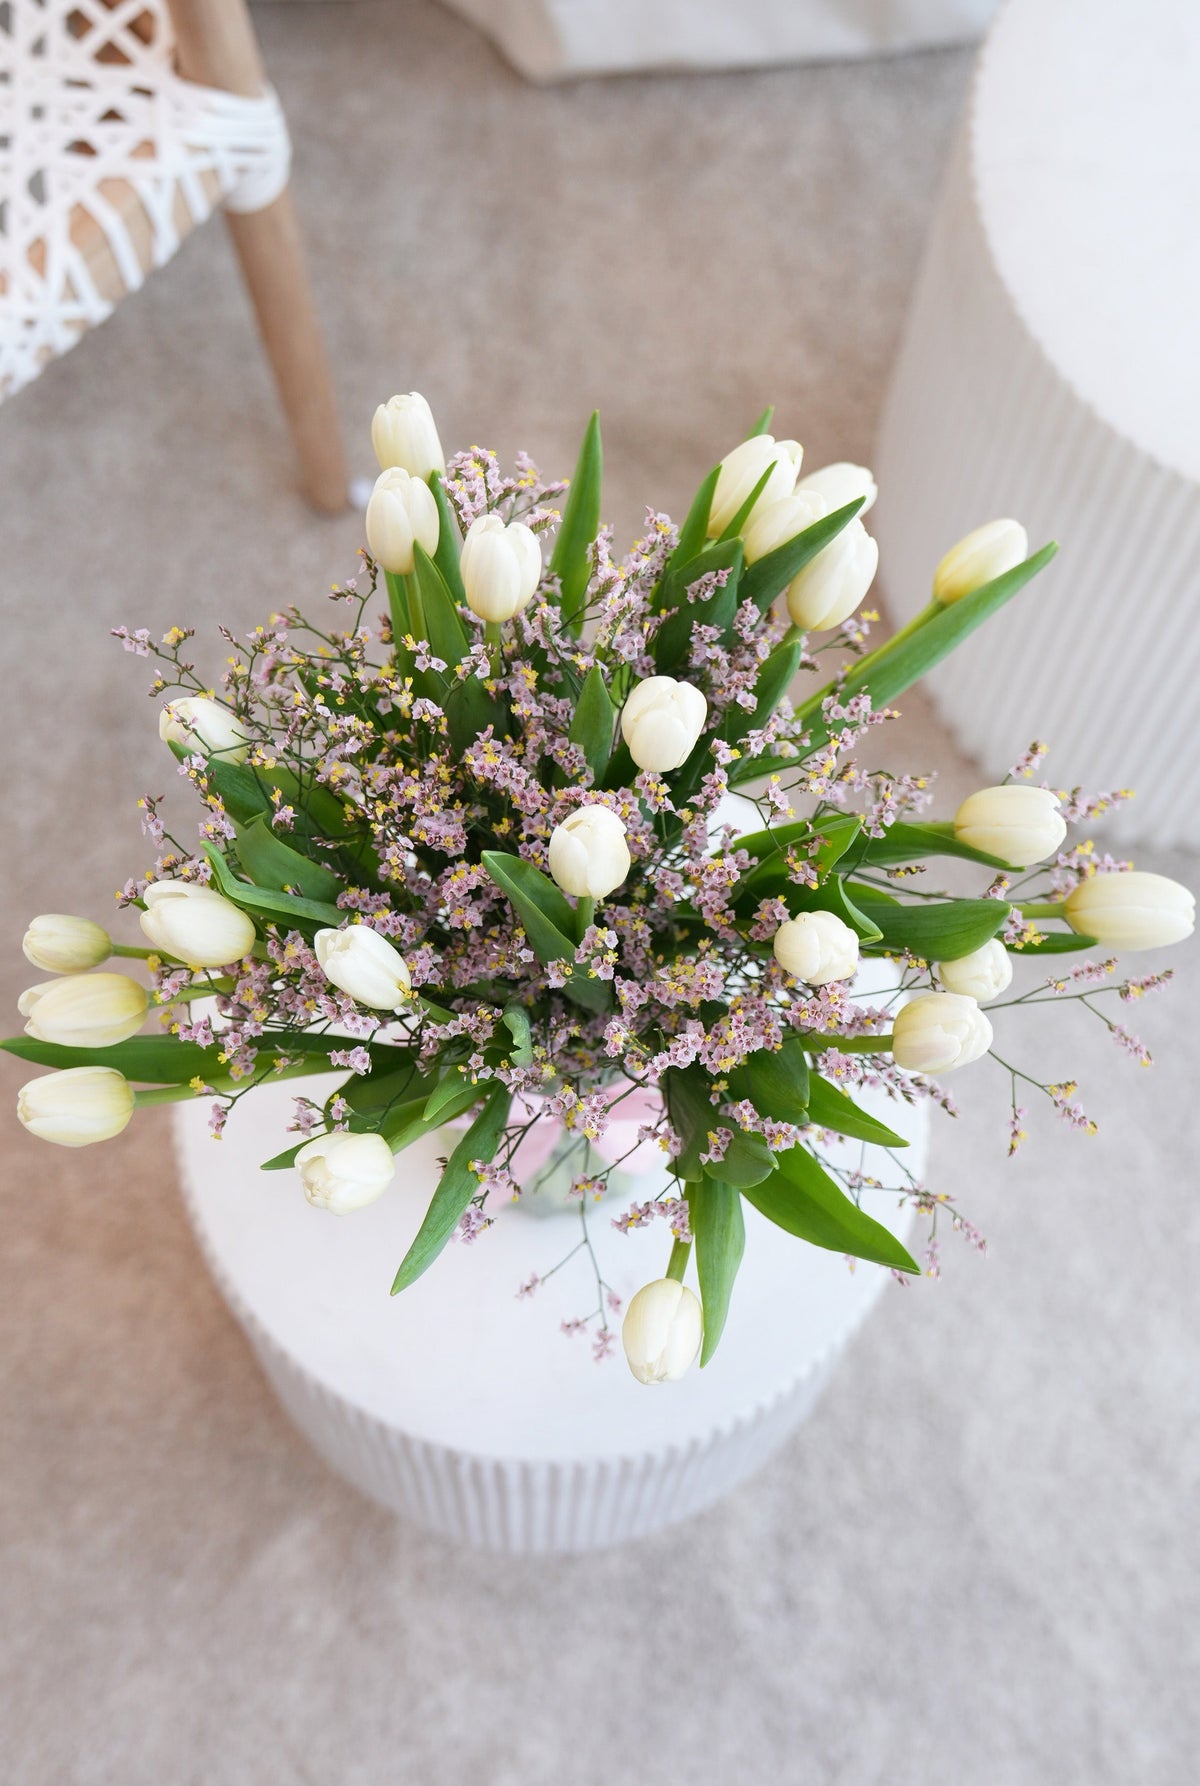 Valentine Luxury White Tulips - Vase with Heart Balloon